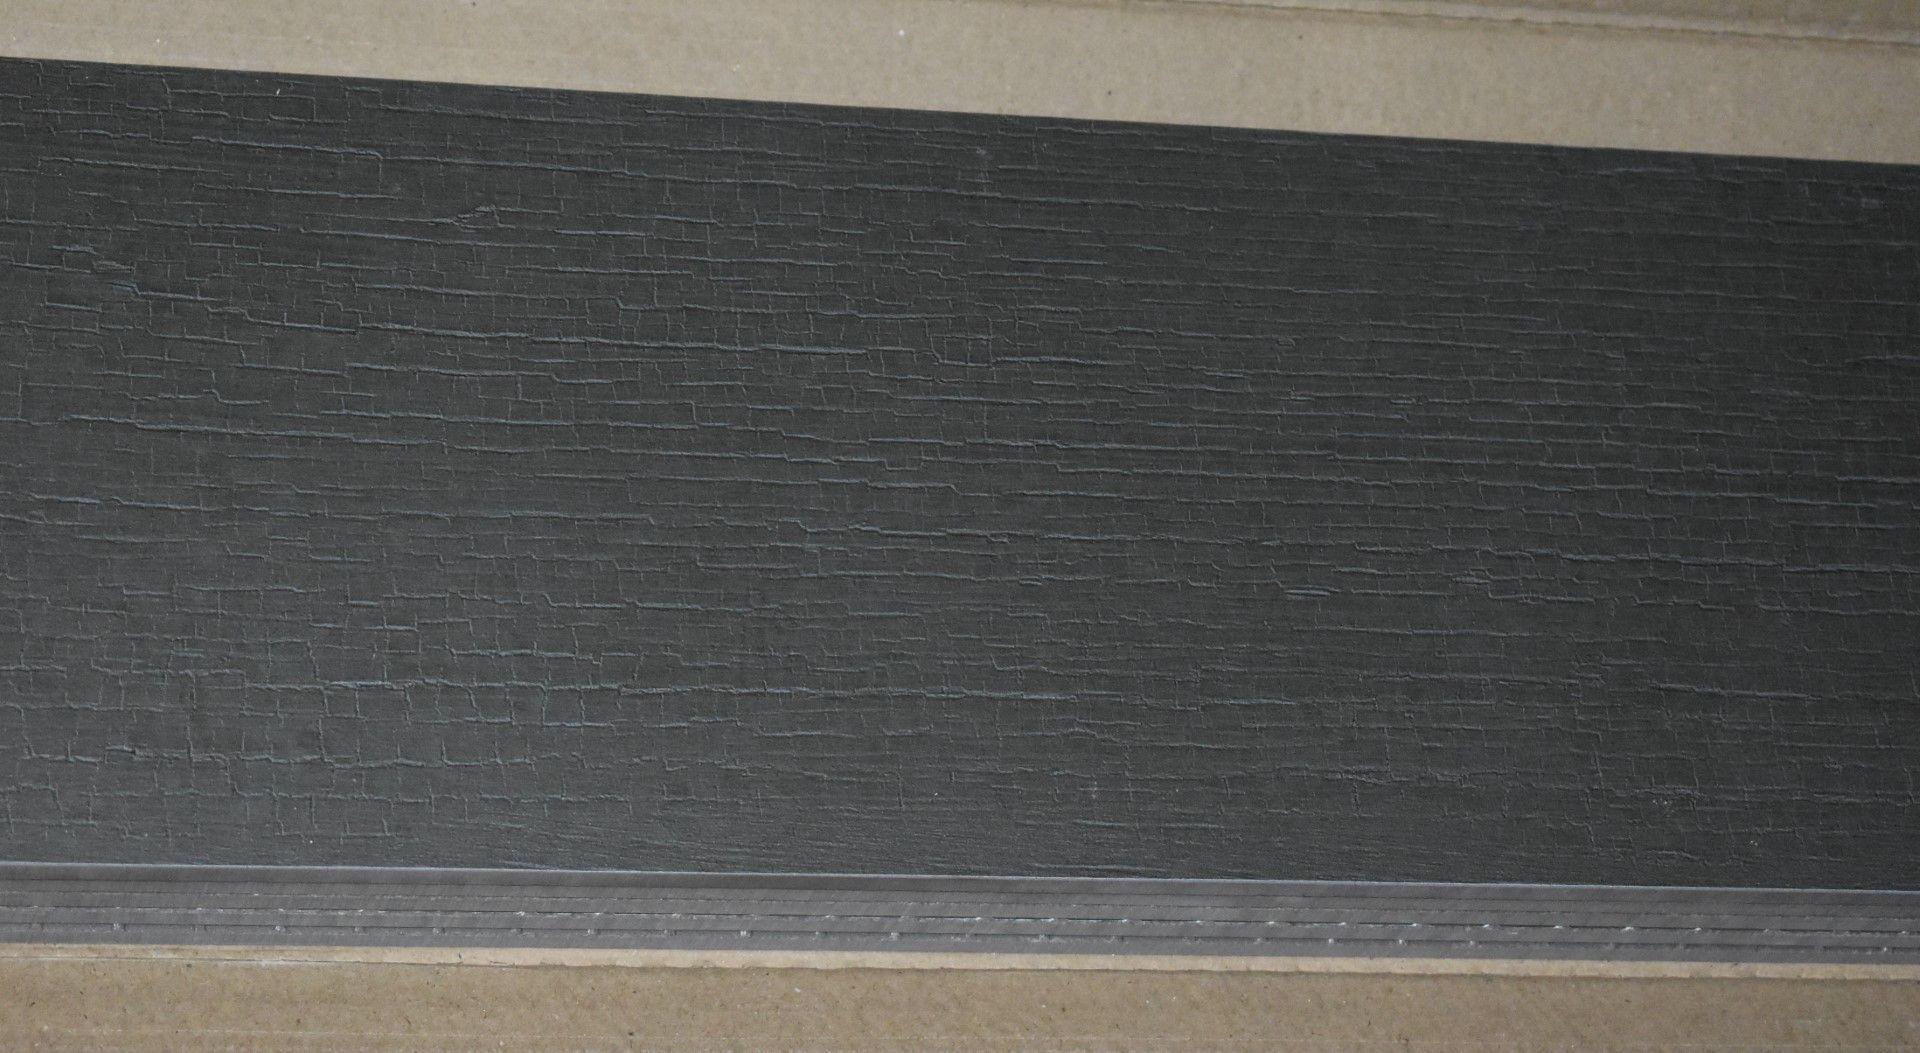 12 x Boxes of RAK Porcelain Floor or Wall Tiles - M Project Wood Design in Dark Grey - 19.5 x 120 cm - Image 3 of 10